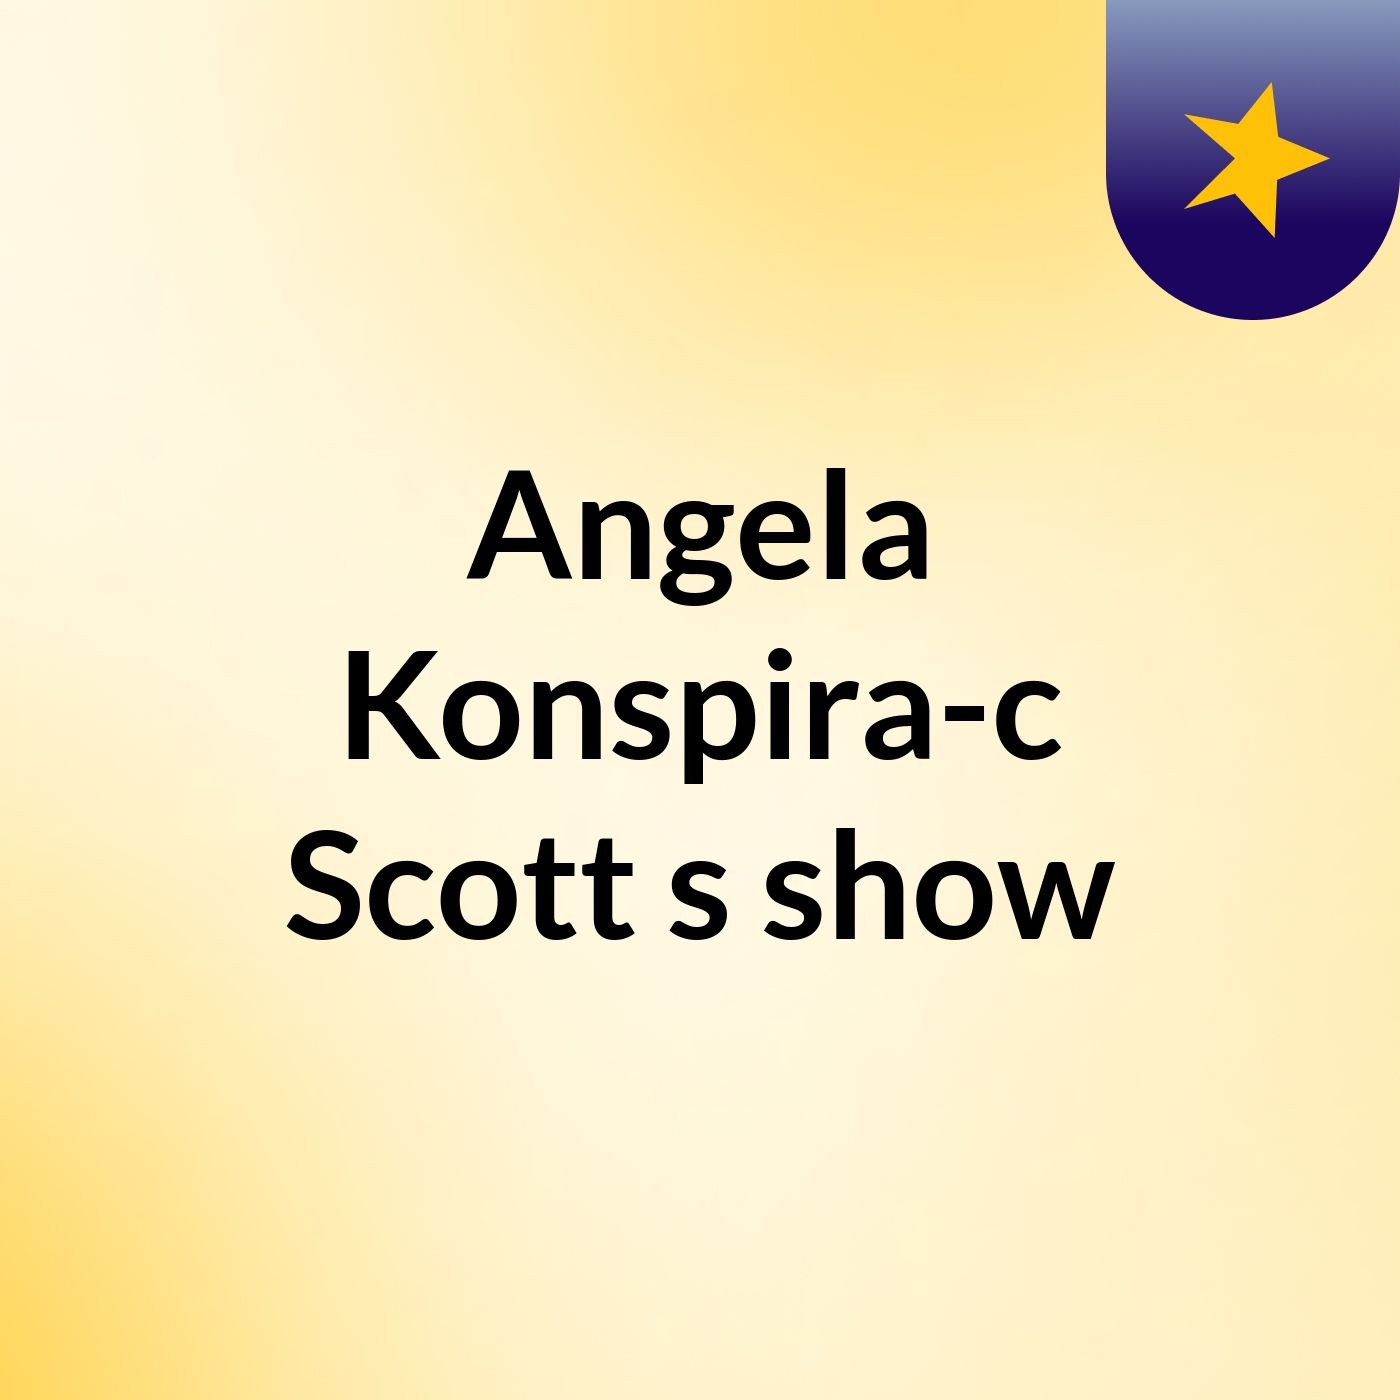 Angela Konspira-c Scott's show